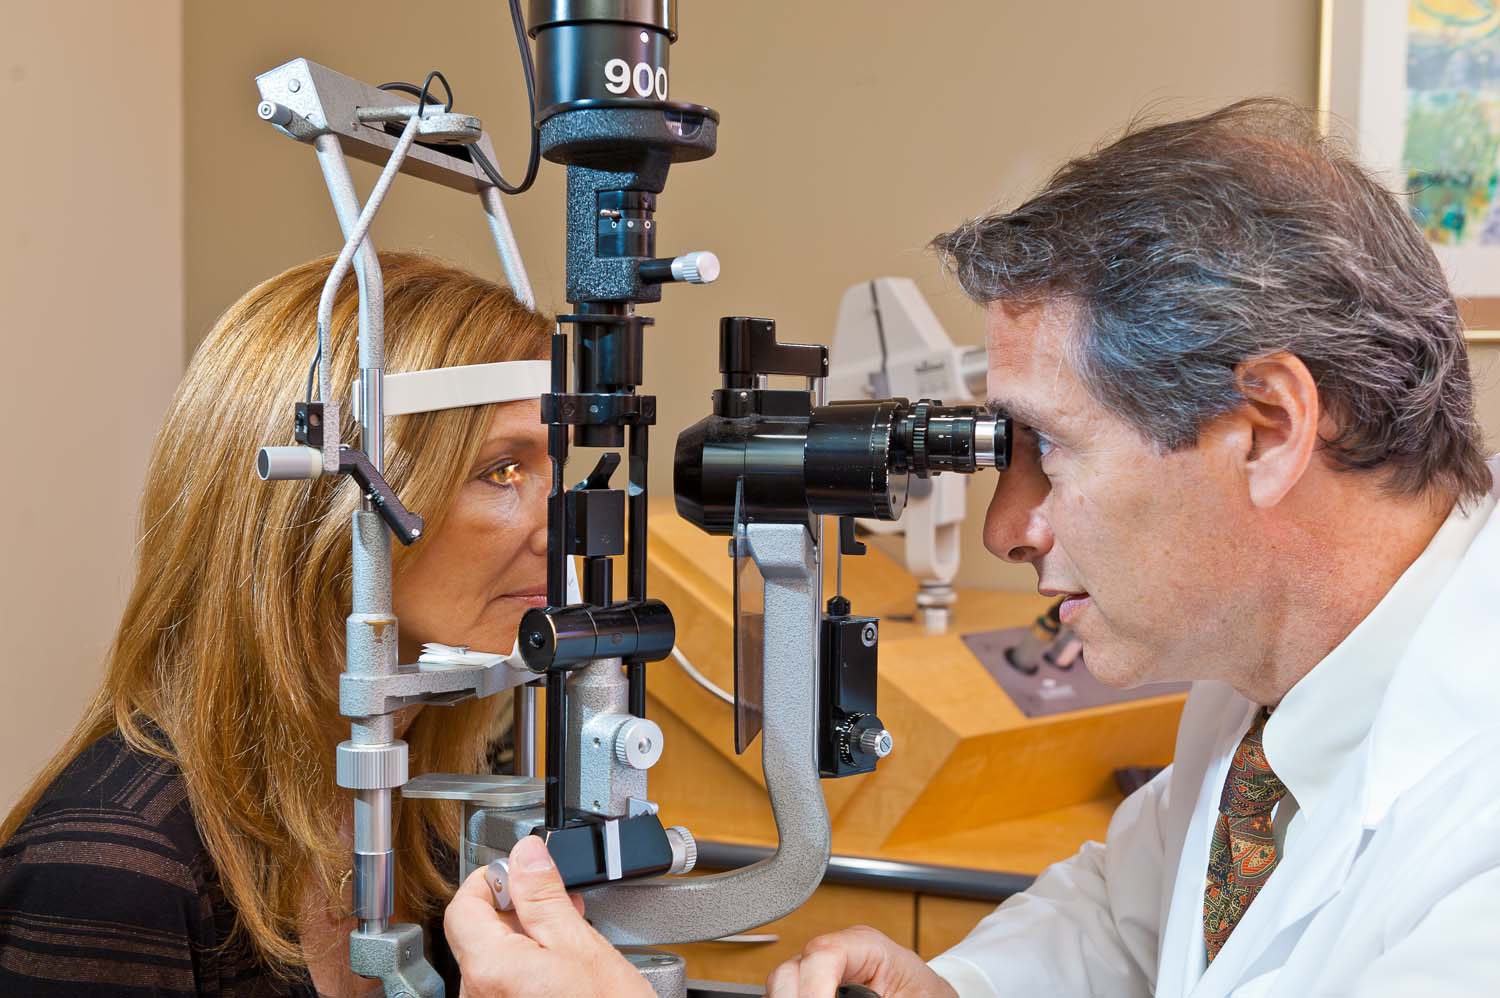 slit lamp biomicroscope examination of the eye